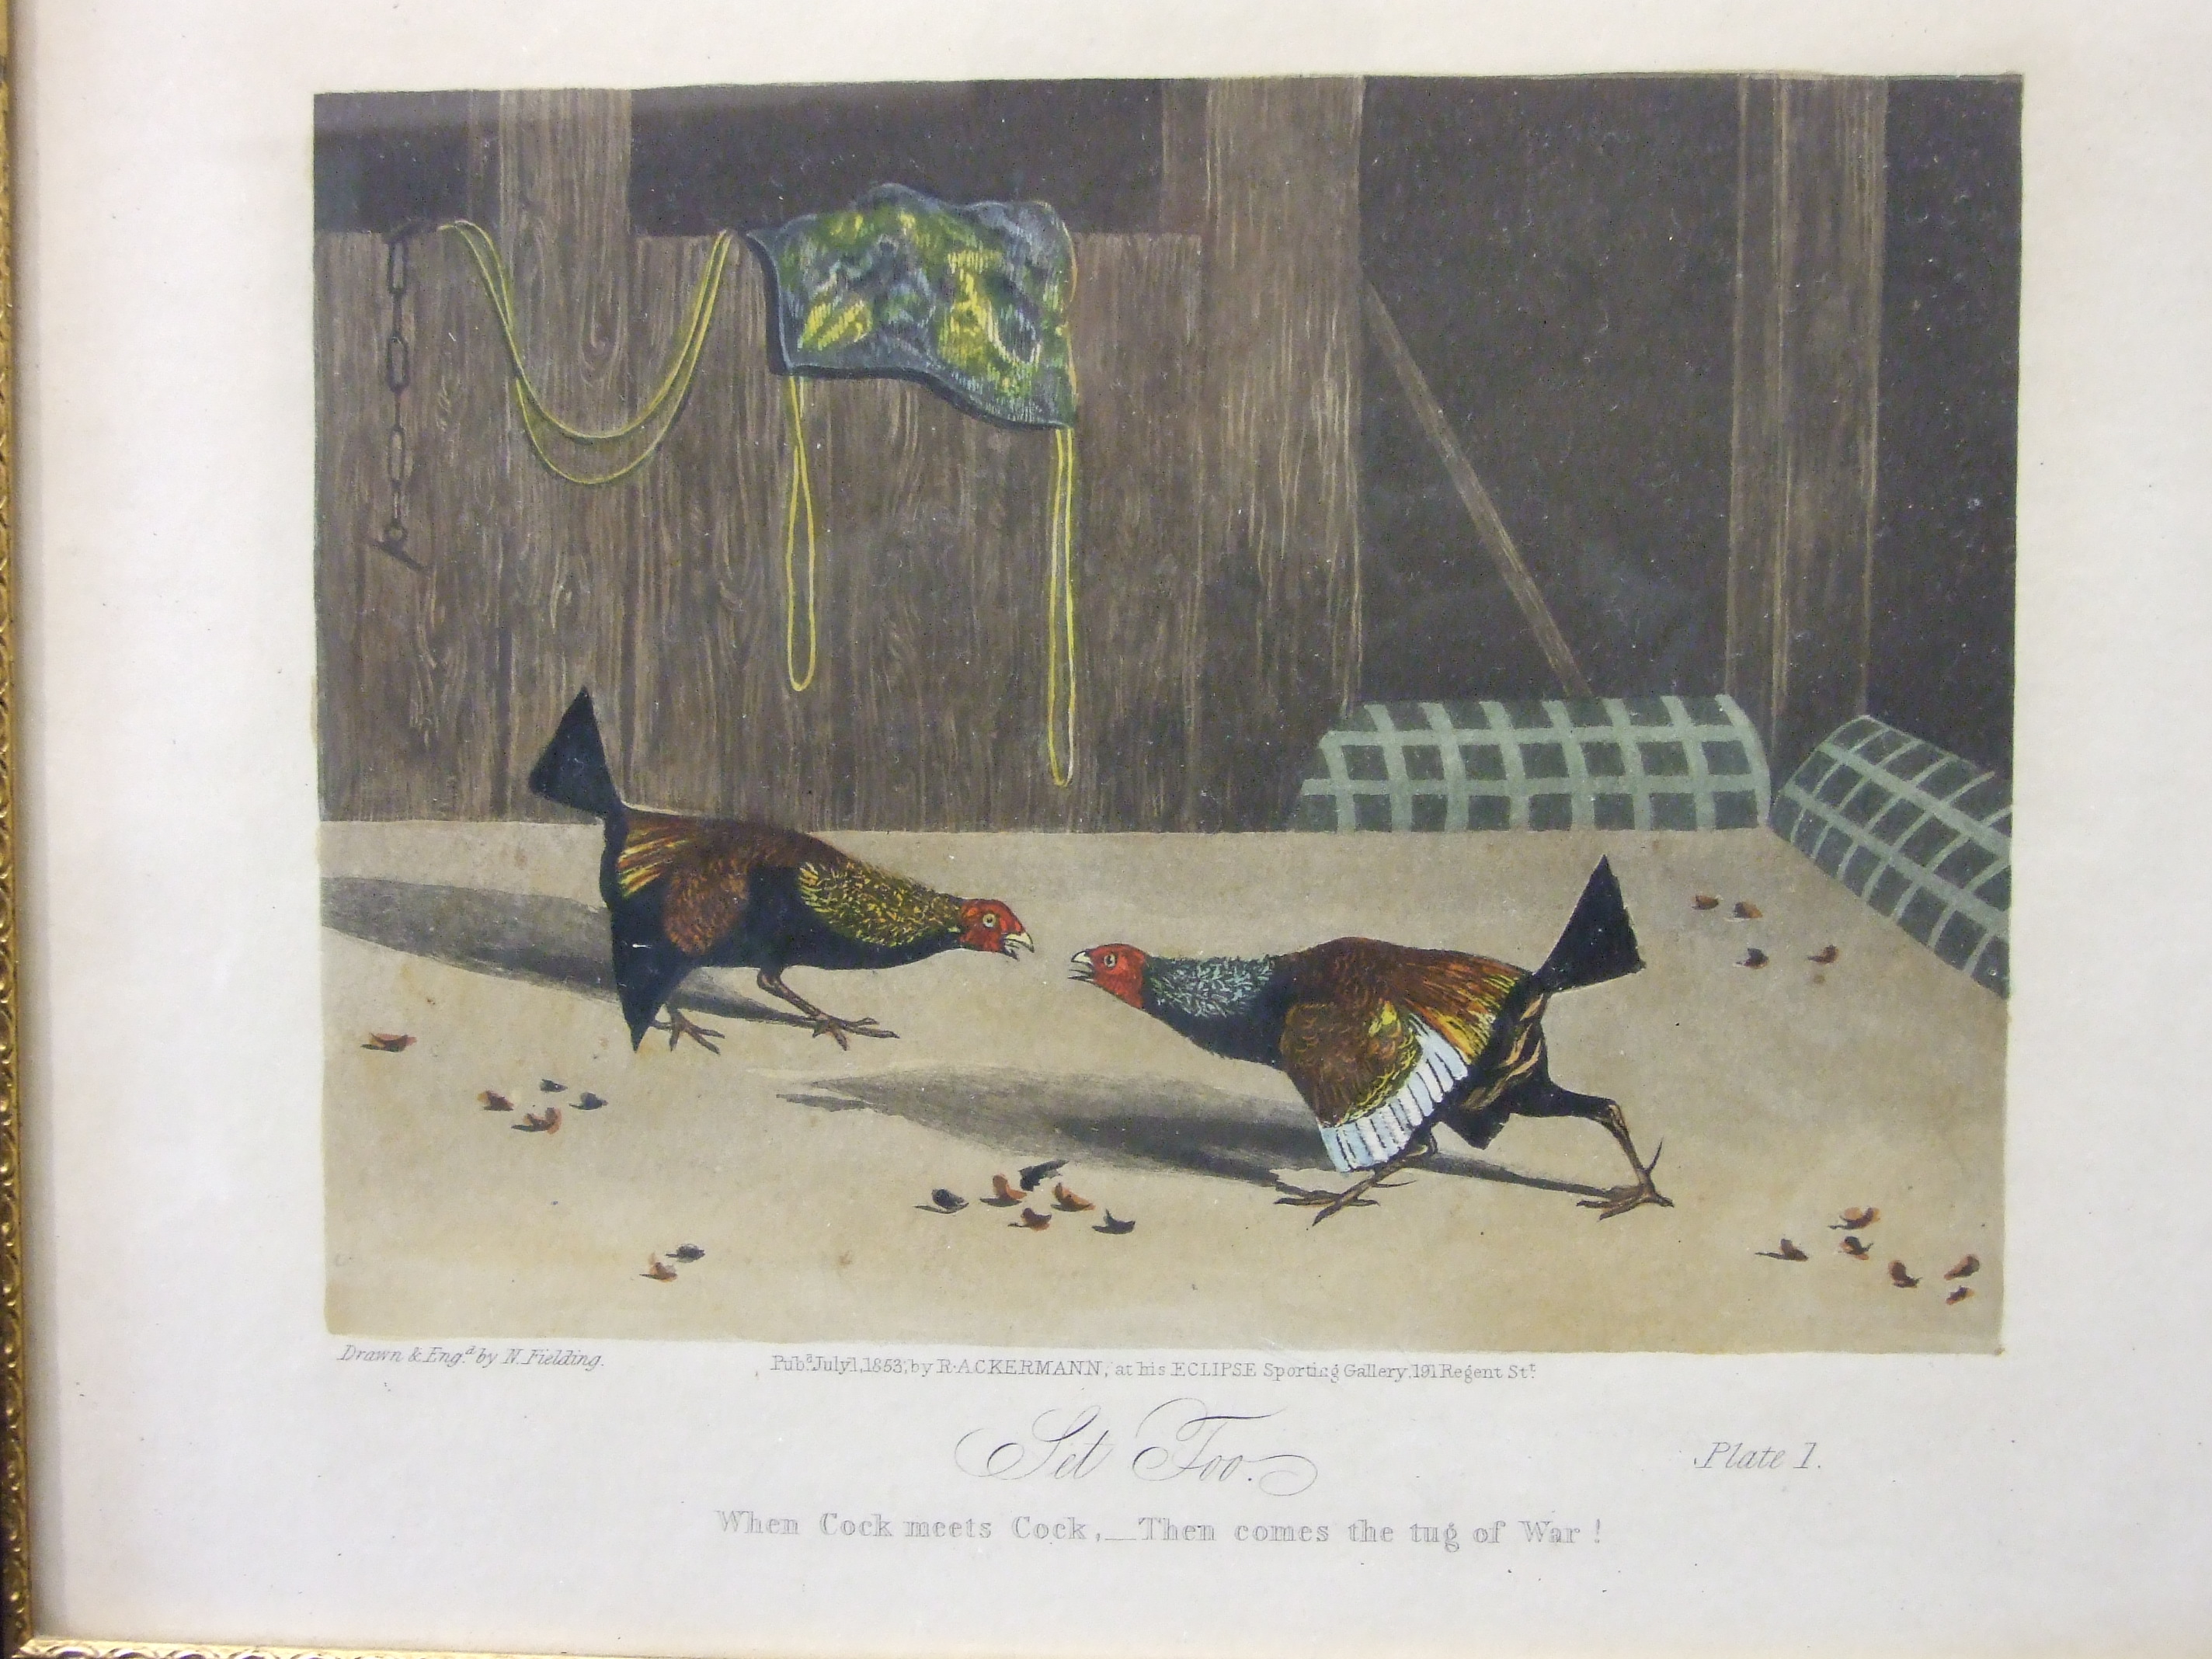 After N Fielding, a set of six cock fighting prints, pub. R A Ackermann 1853, 22 x 27cm, (6).